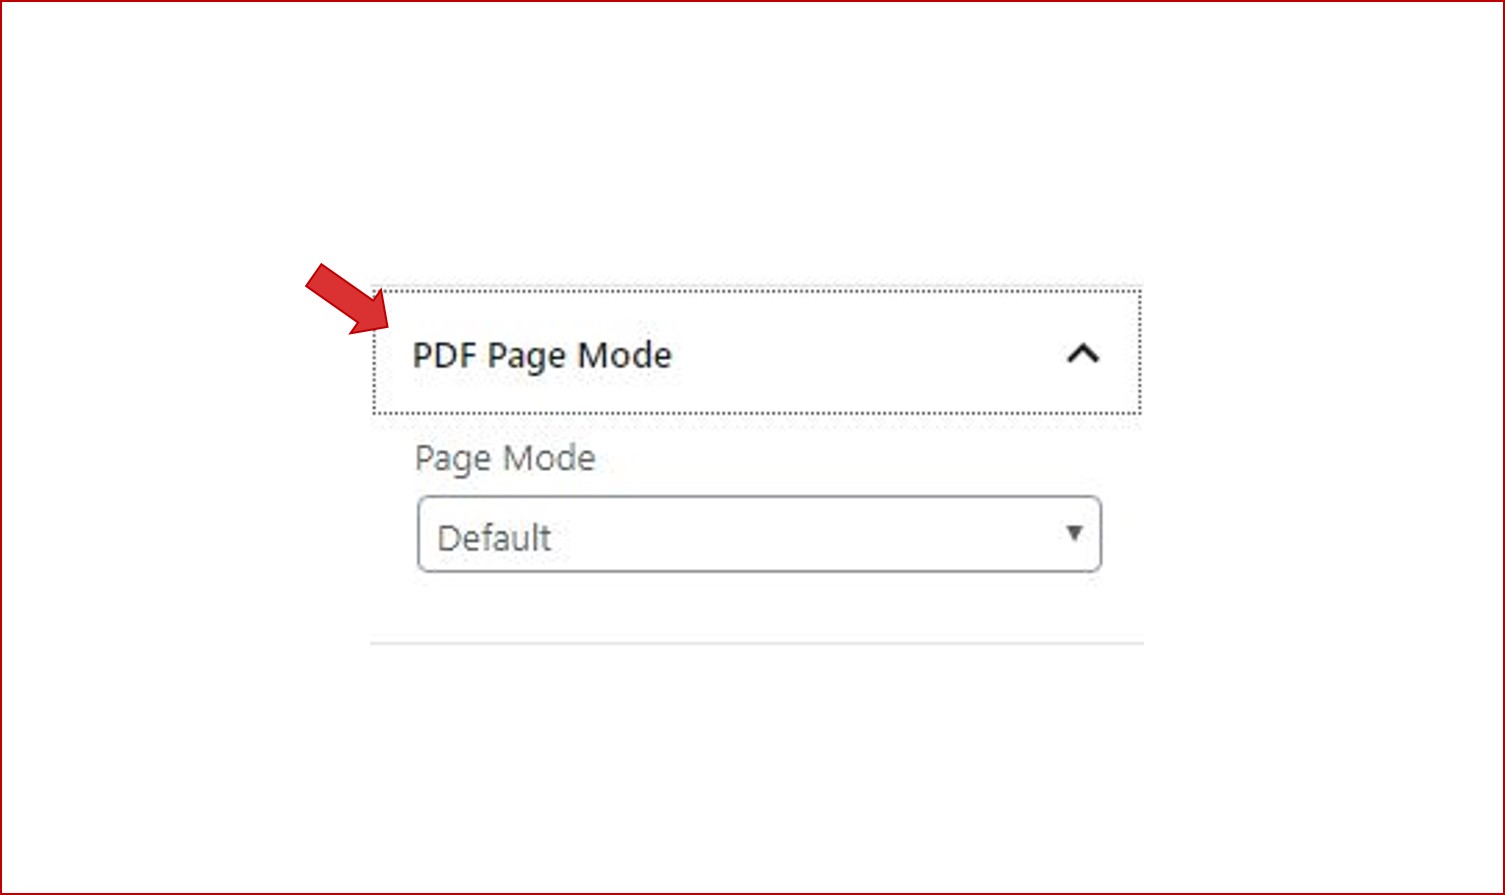 Choosing default PDF Viewer Page Mode